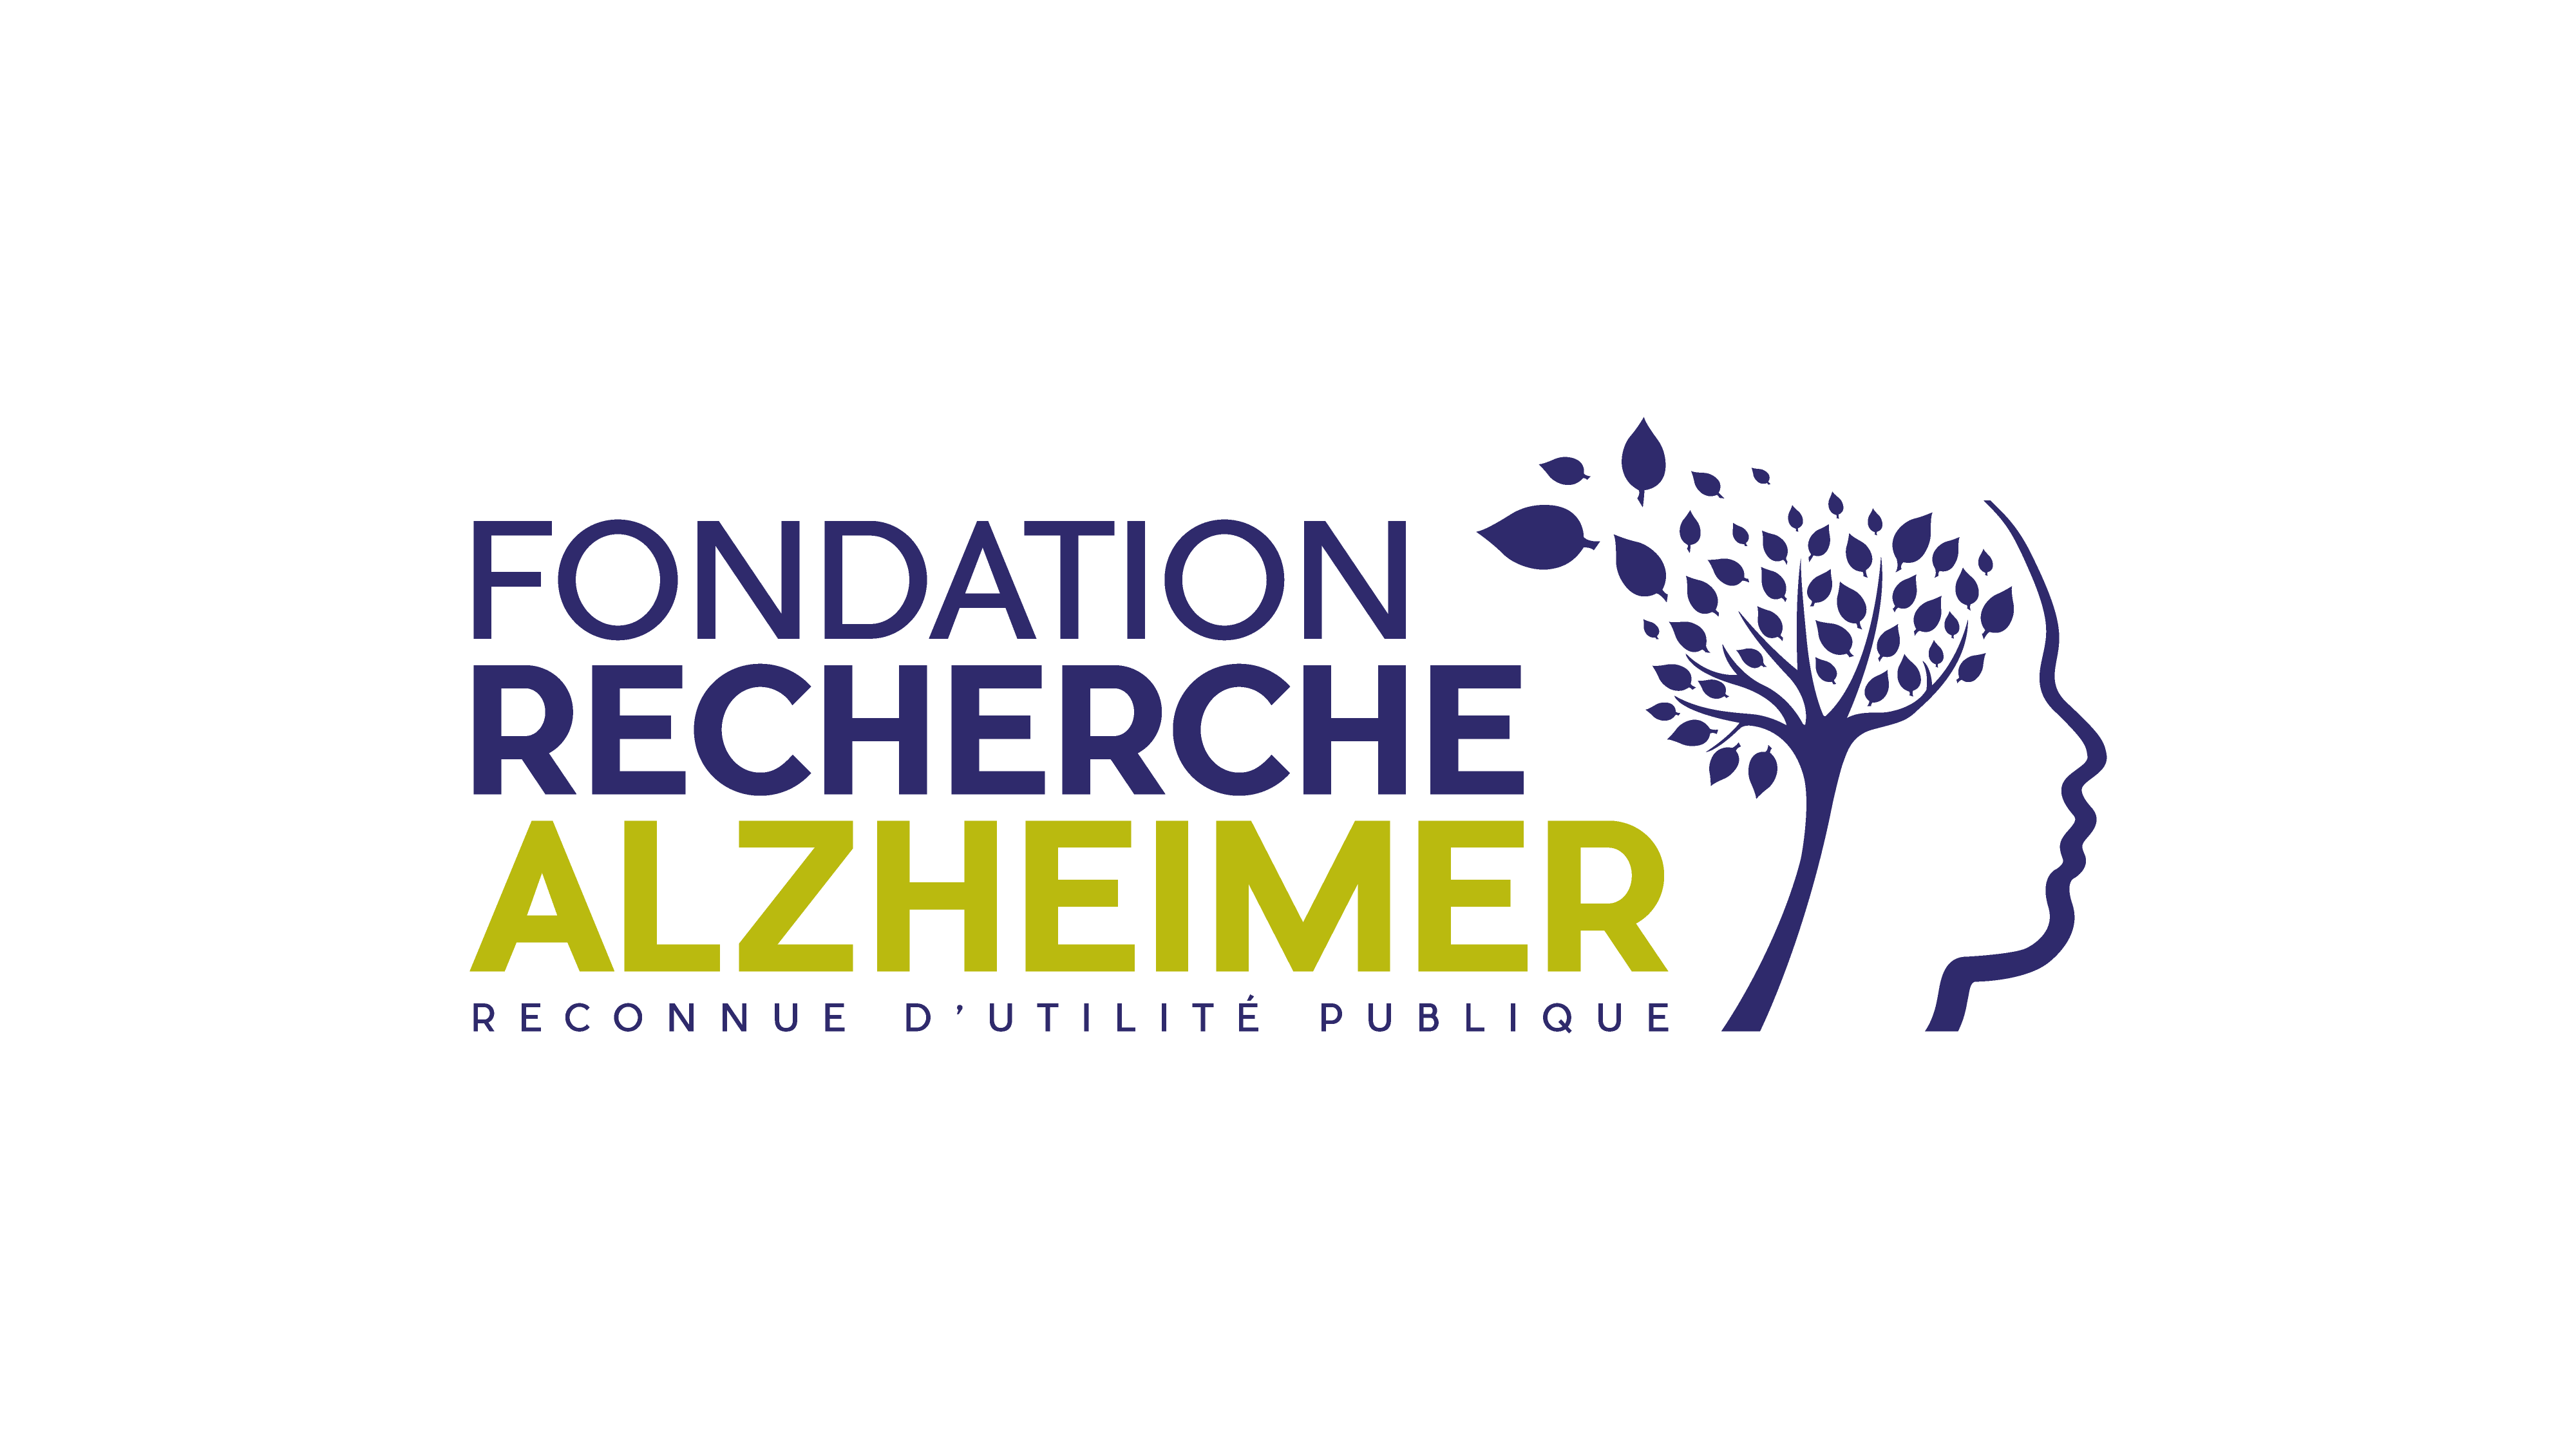 Voyages solidaire avec Fondation recherche alzheimer